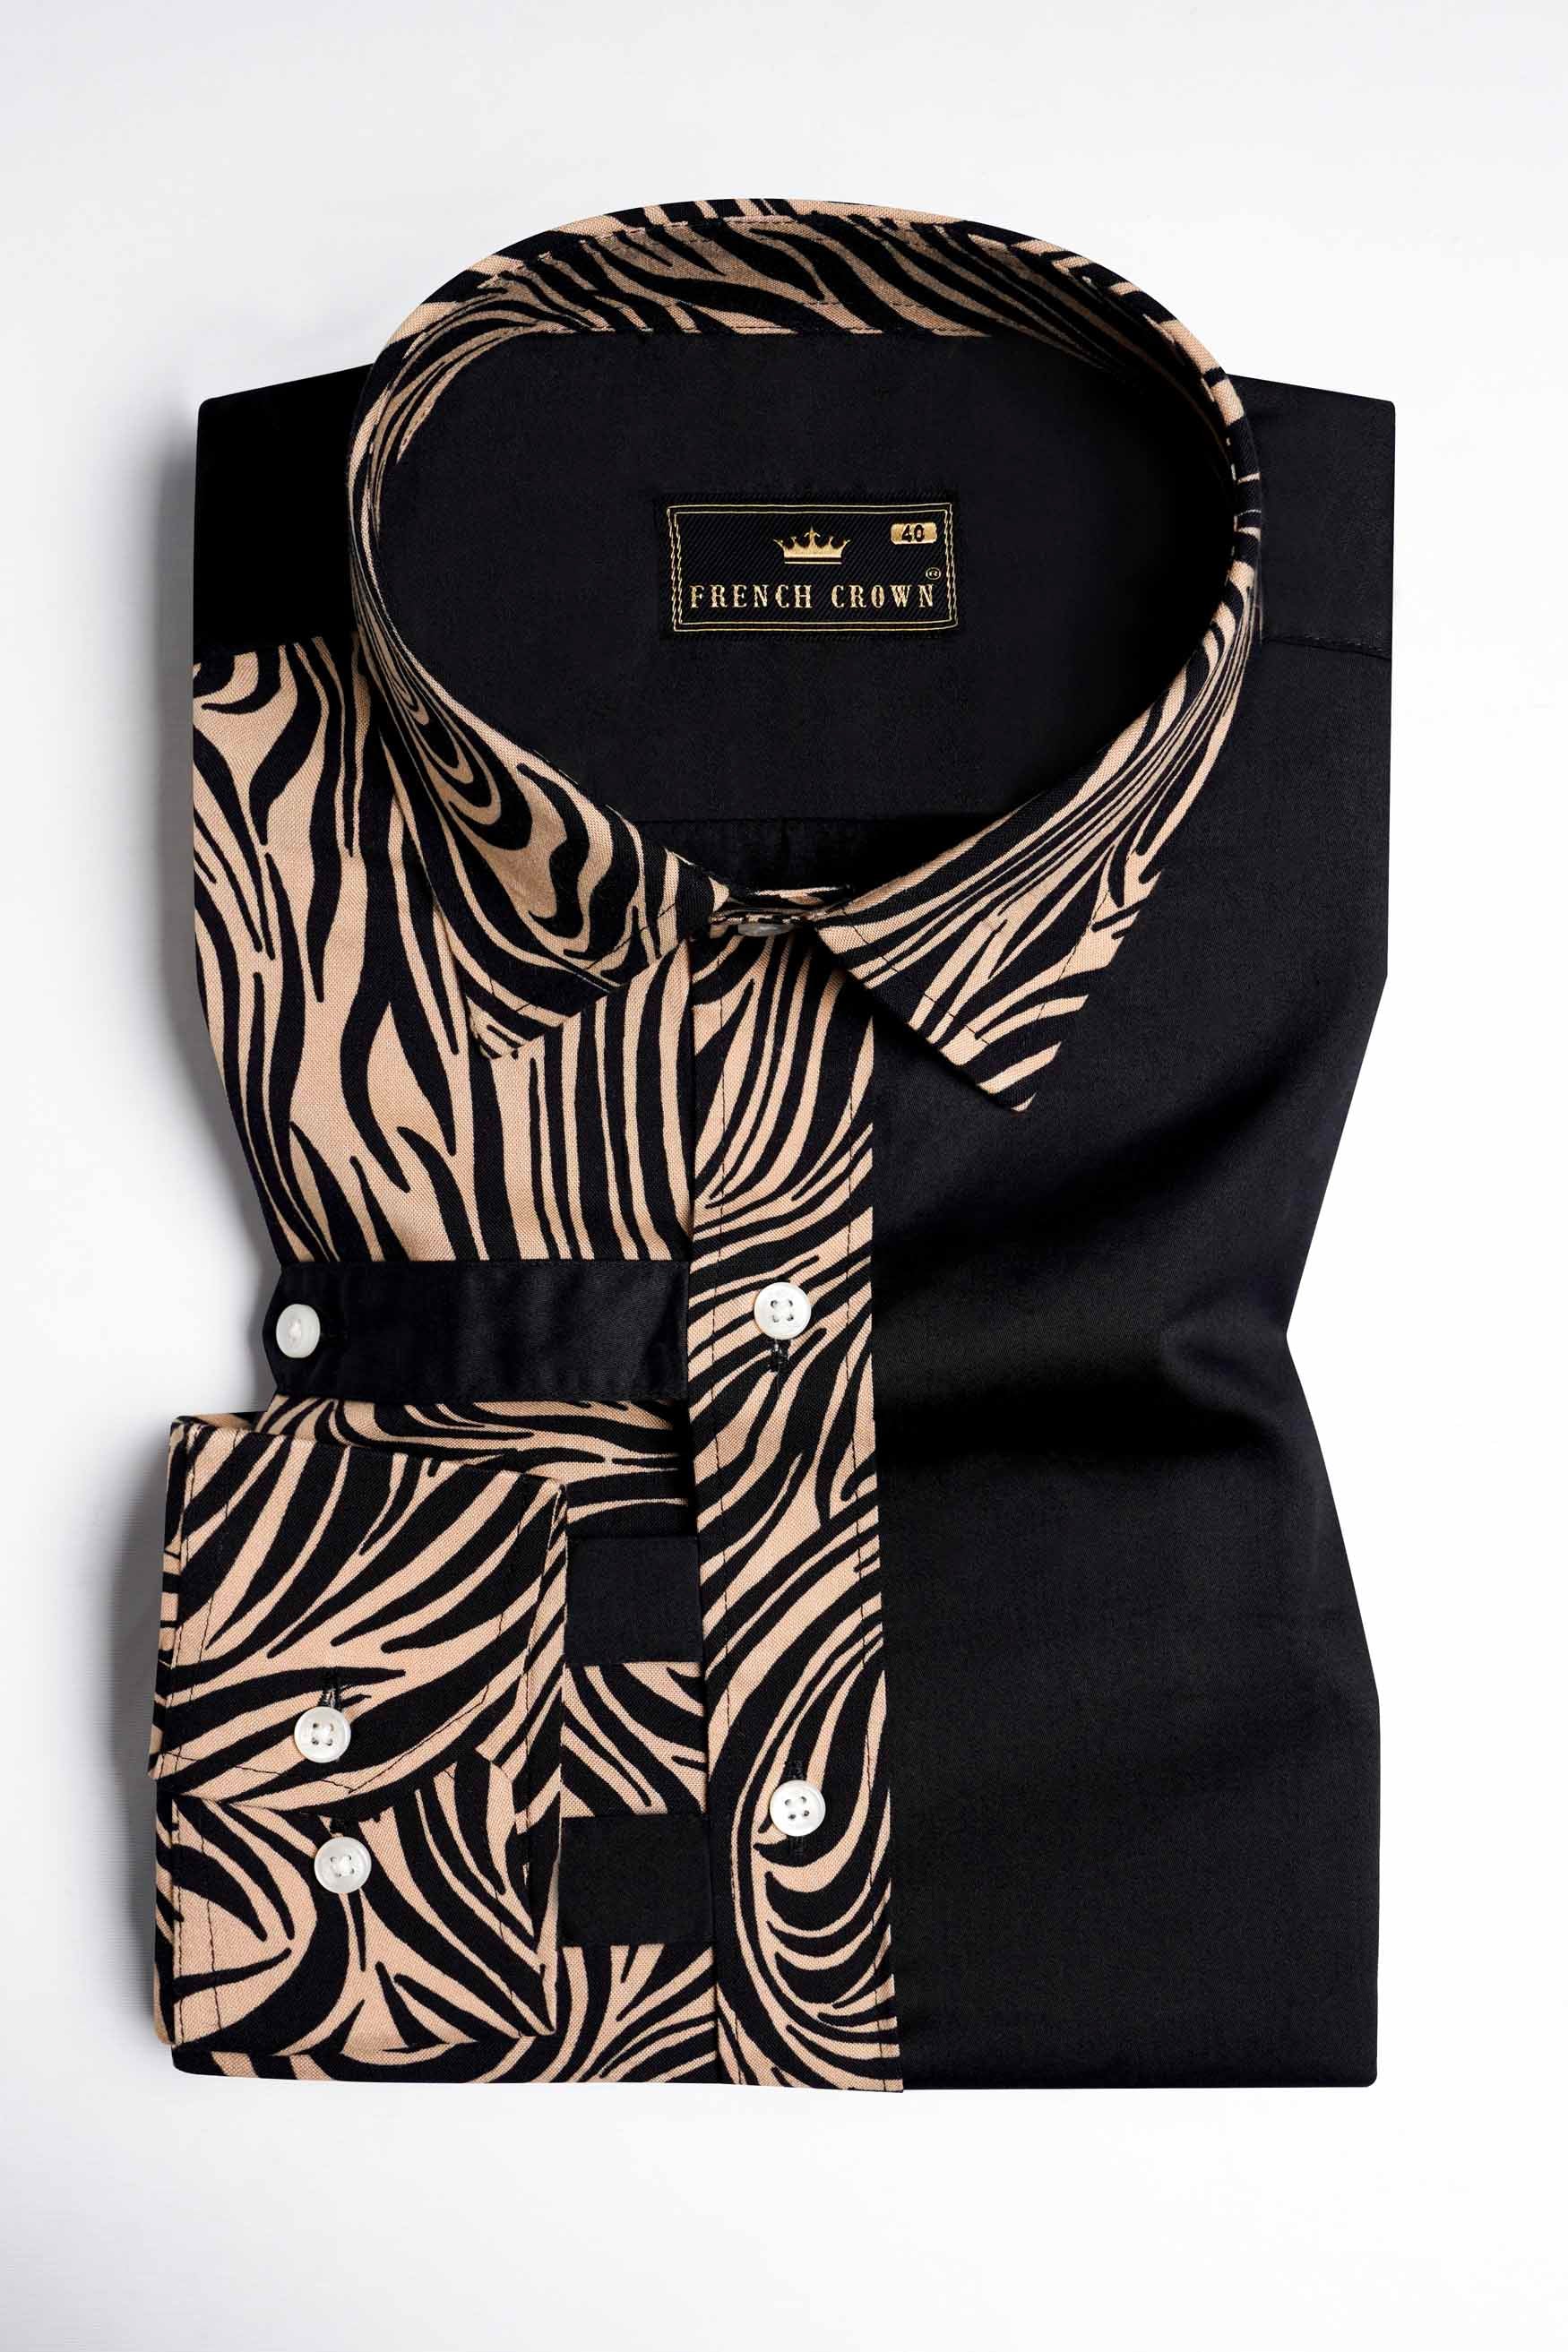 Half Animal Printed and Half Solid Black Premium Tencel Designer Shirt